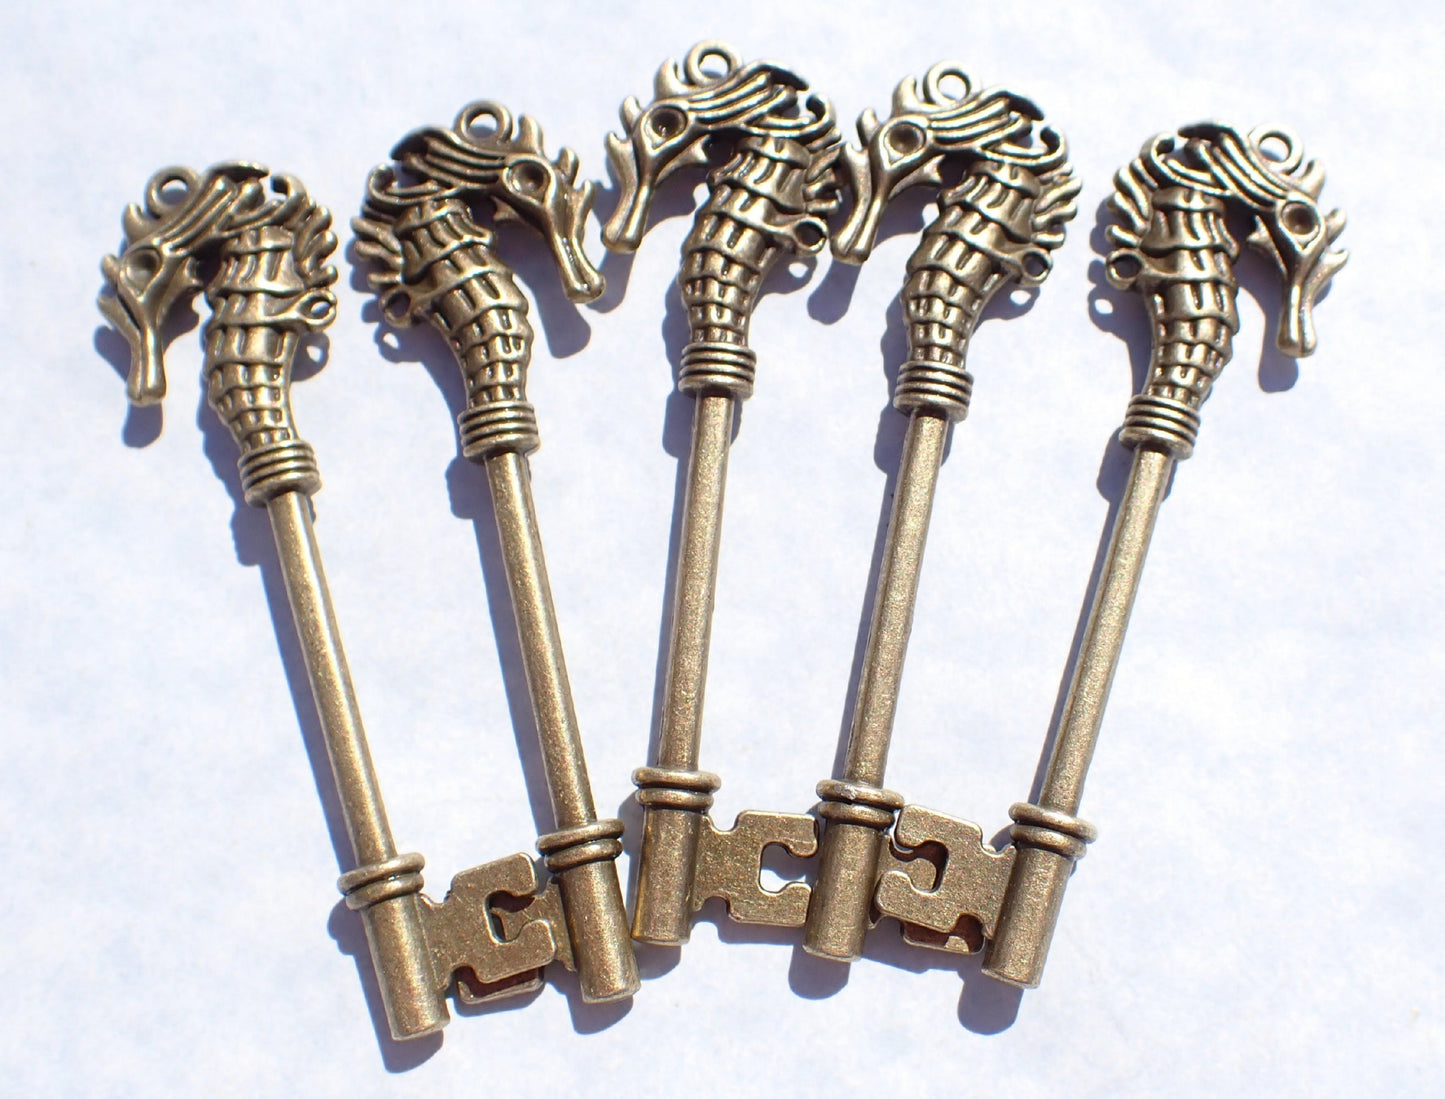 Seahorse Keys - Set of 2 New Bronze Toned Skeleton Keys Charms for Mosaics Mixed Media Art Jewelry